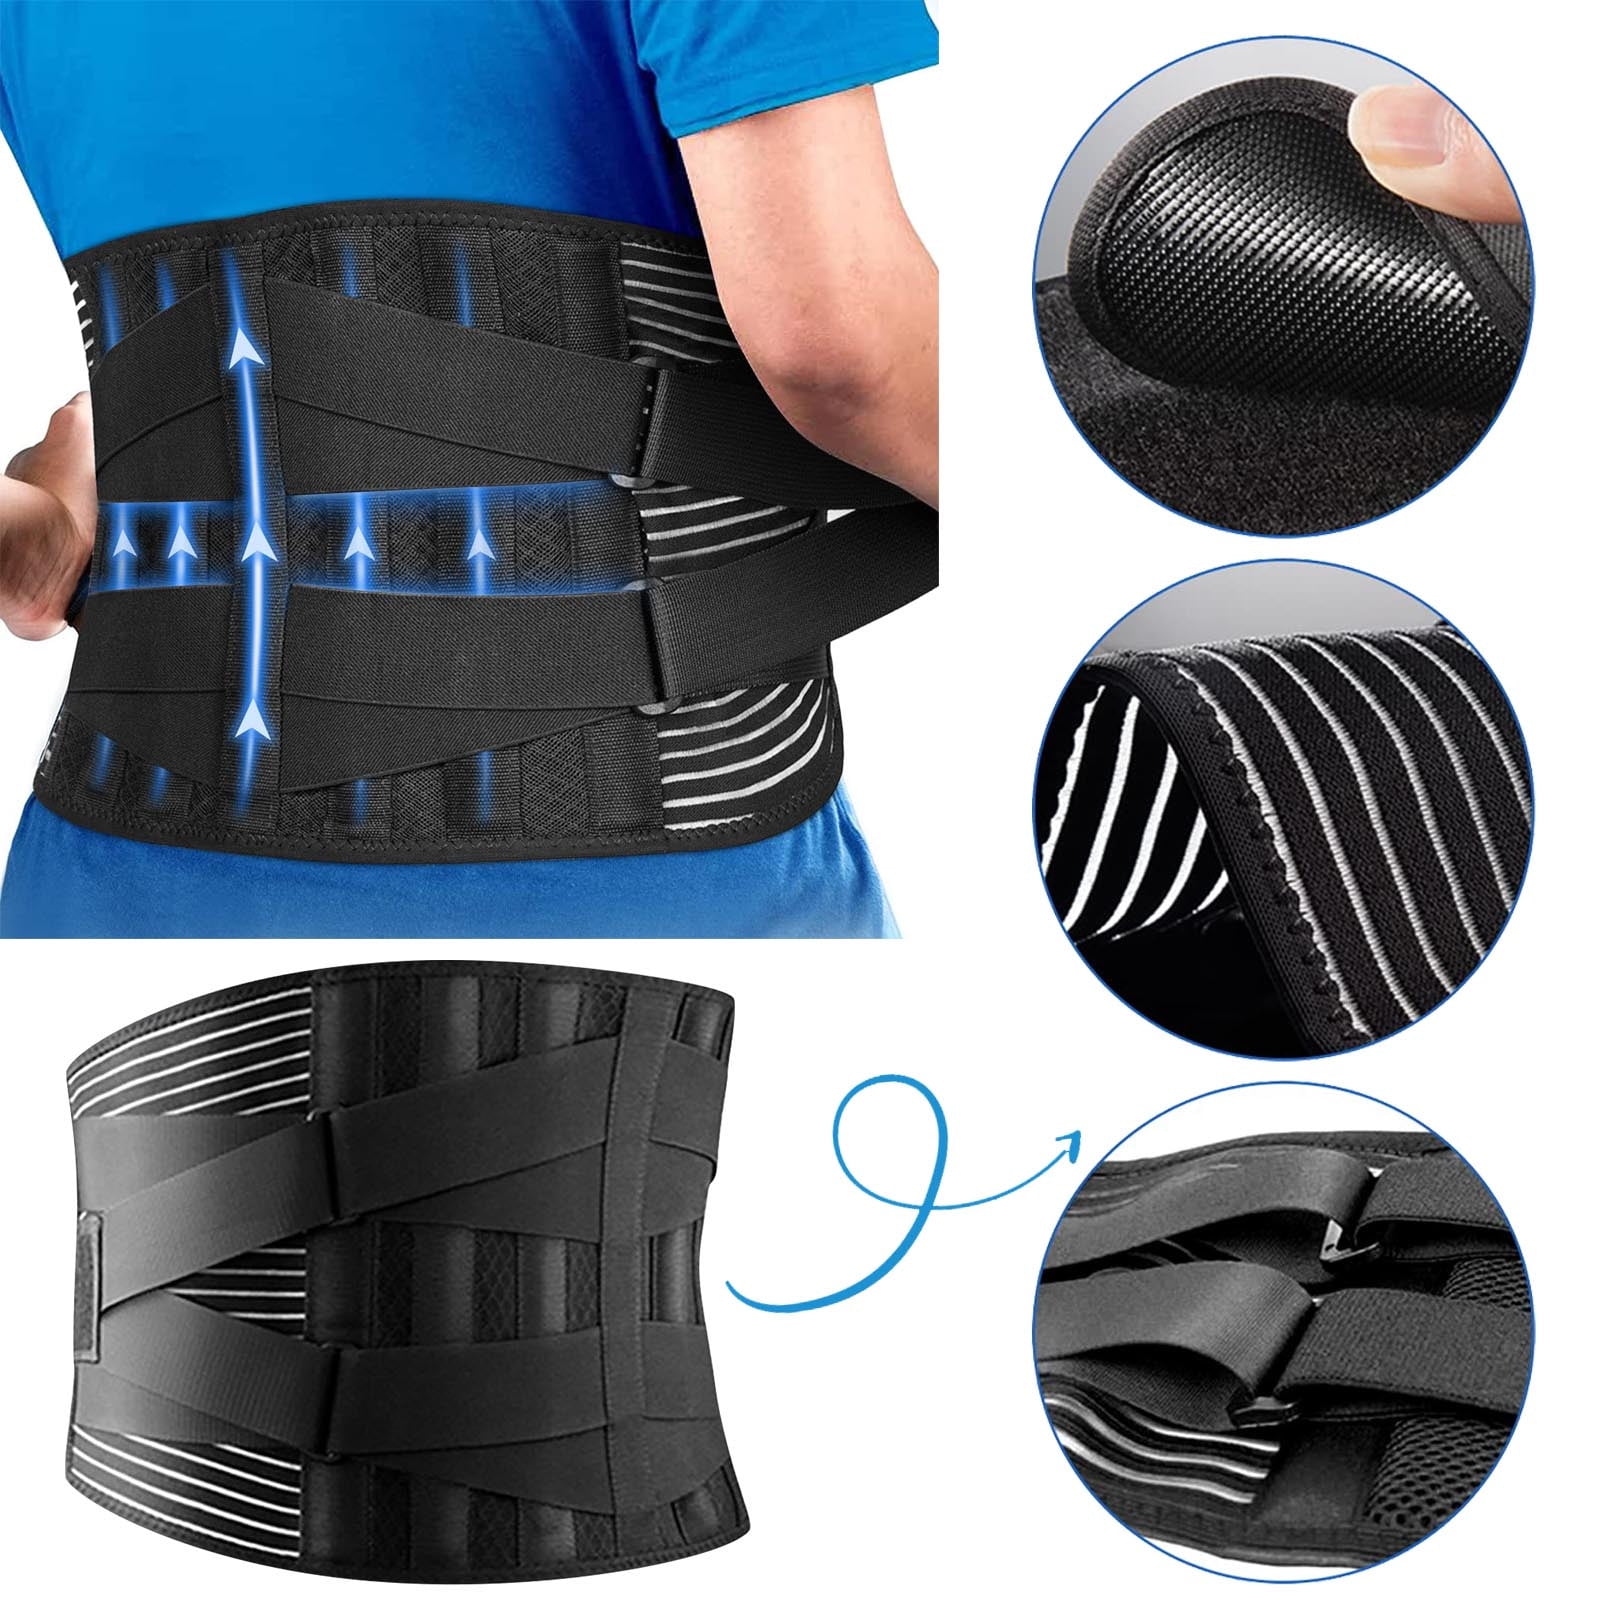 Back Support Belt For Men And Women,Comfortable Lower Back Brace, Waist ...